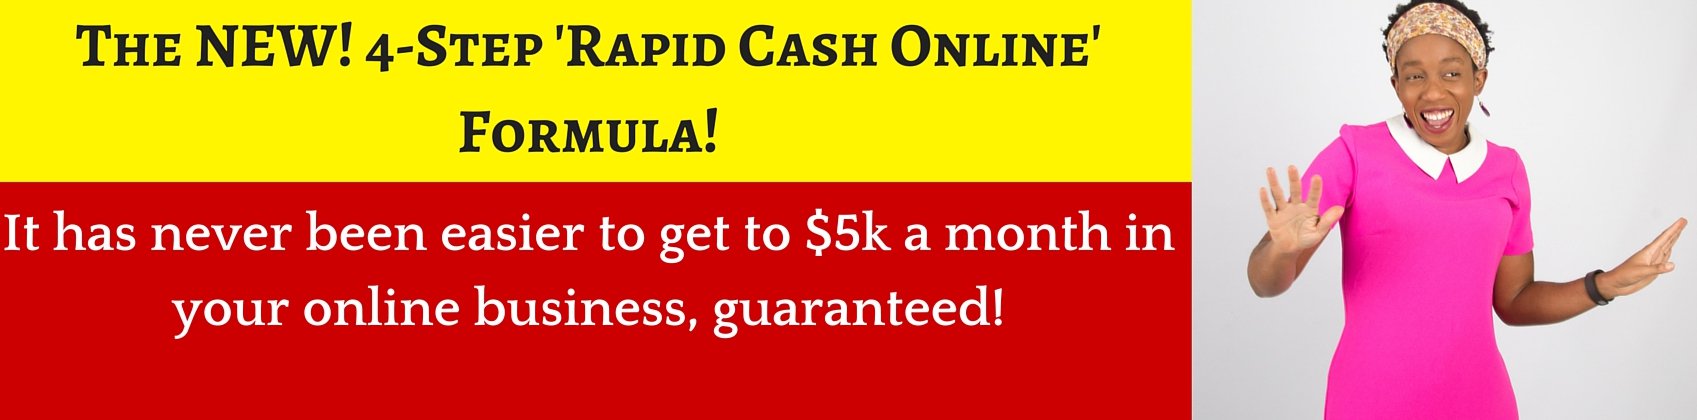 Rapid Cash Online